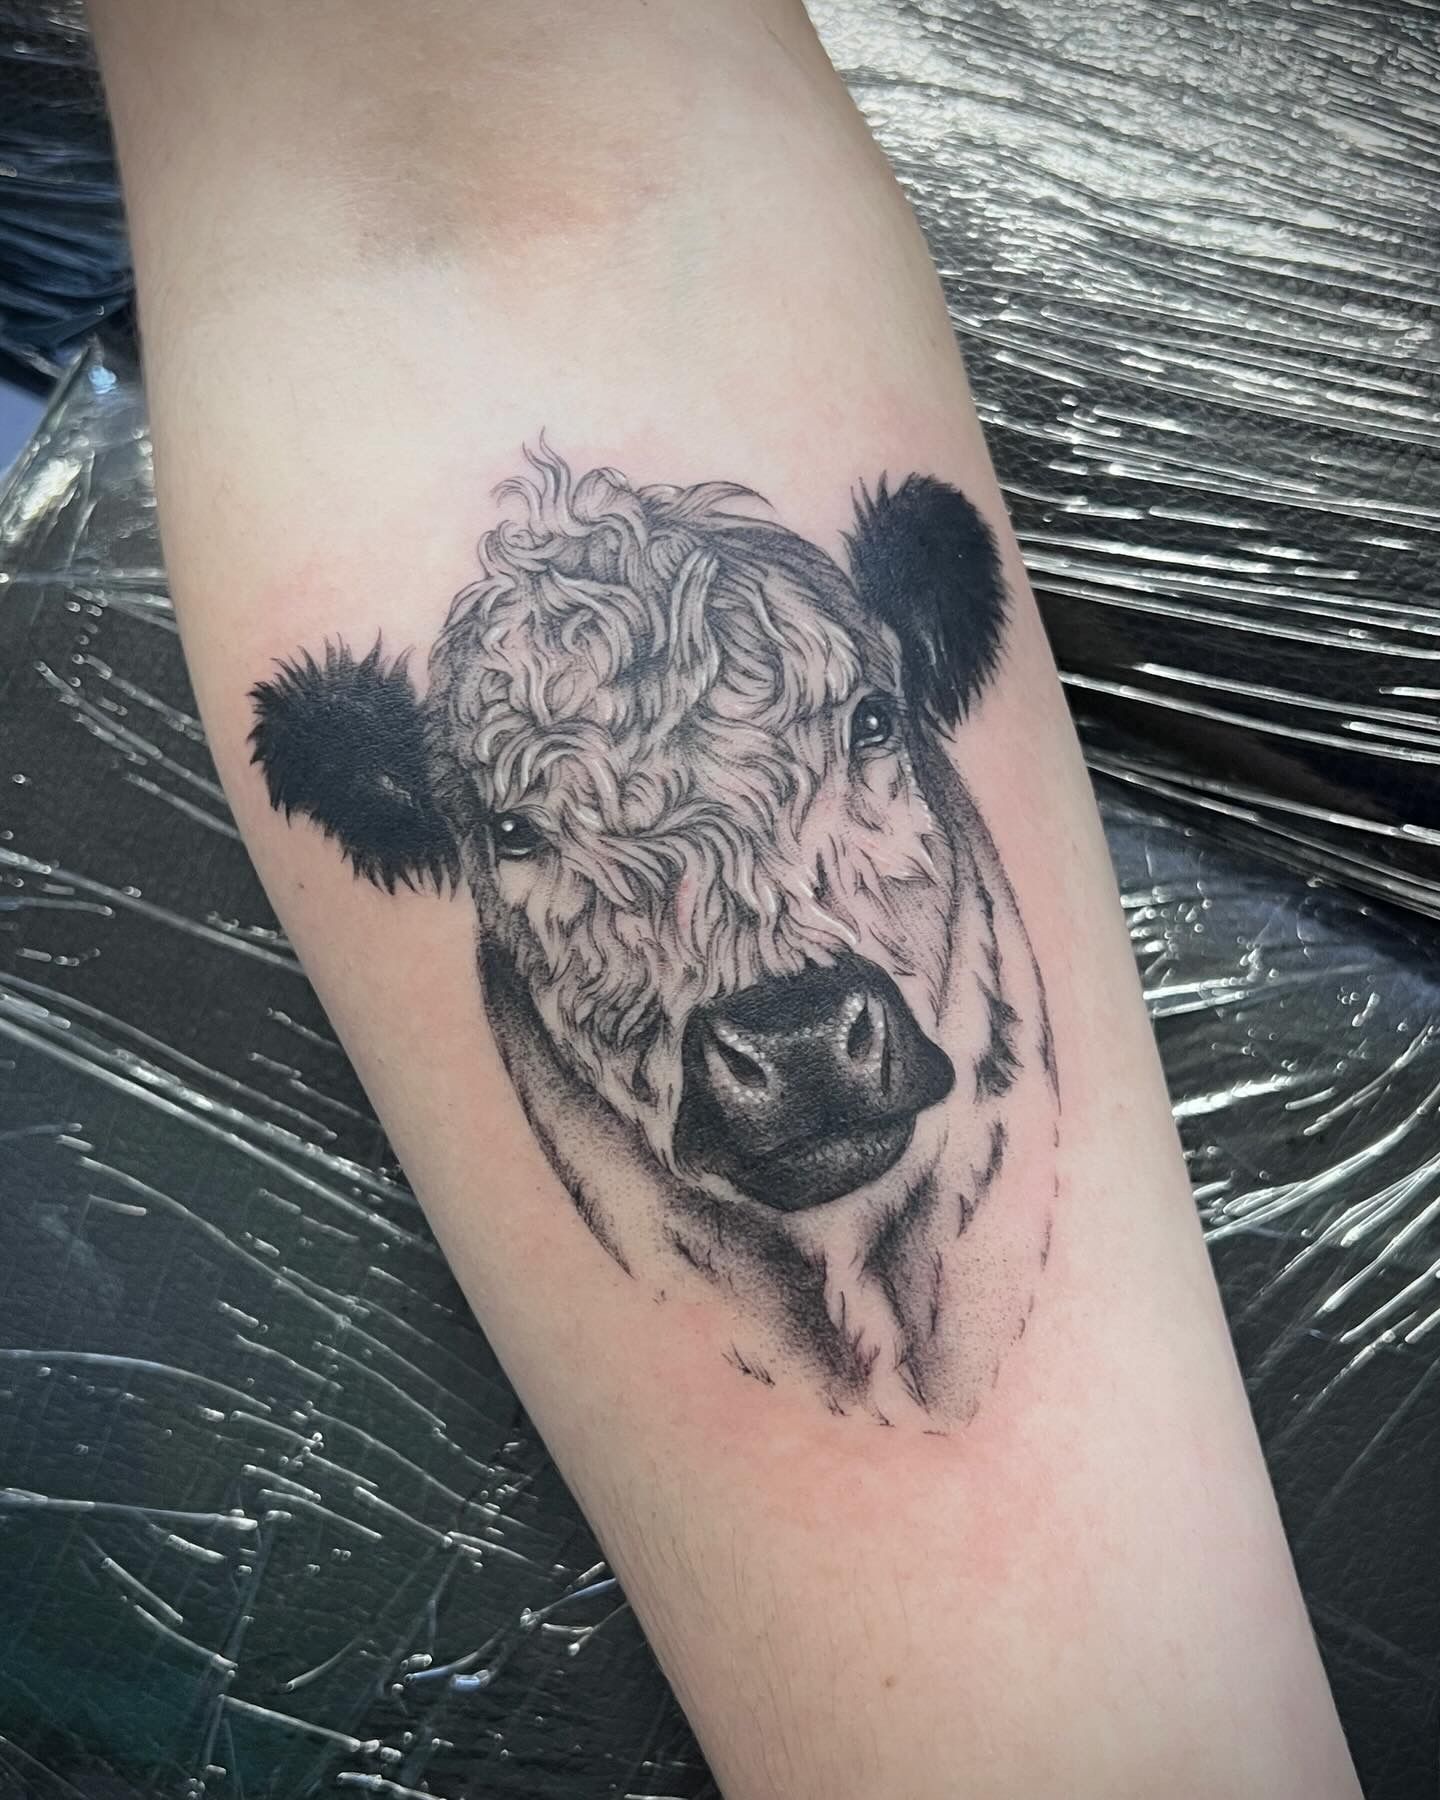 Hand poked on Instagram | Cow tattoo, Tattoos, Small tattoos